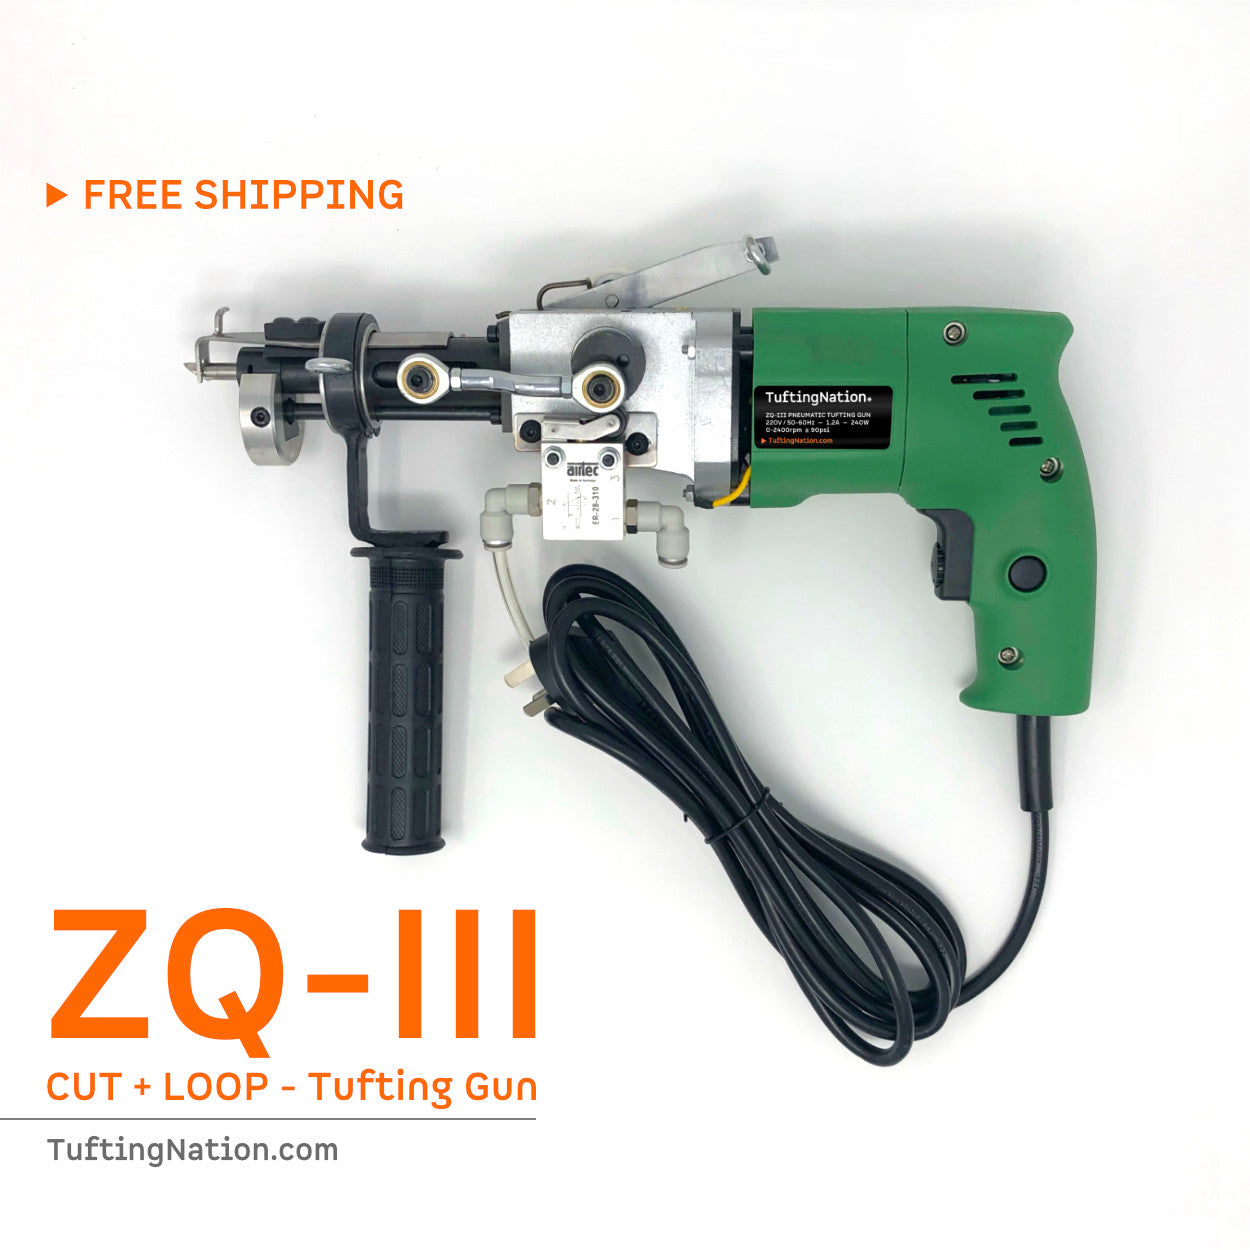 ZQ-III Pneumatic Tufting Gun | Buy a Professional Cut and Loop Pile Tufting Machine